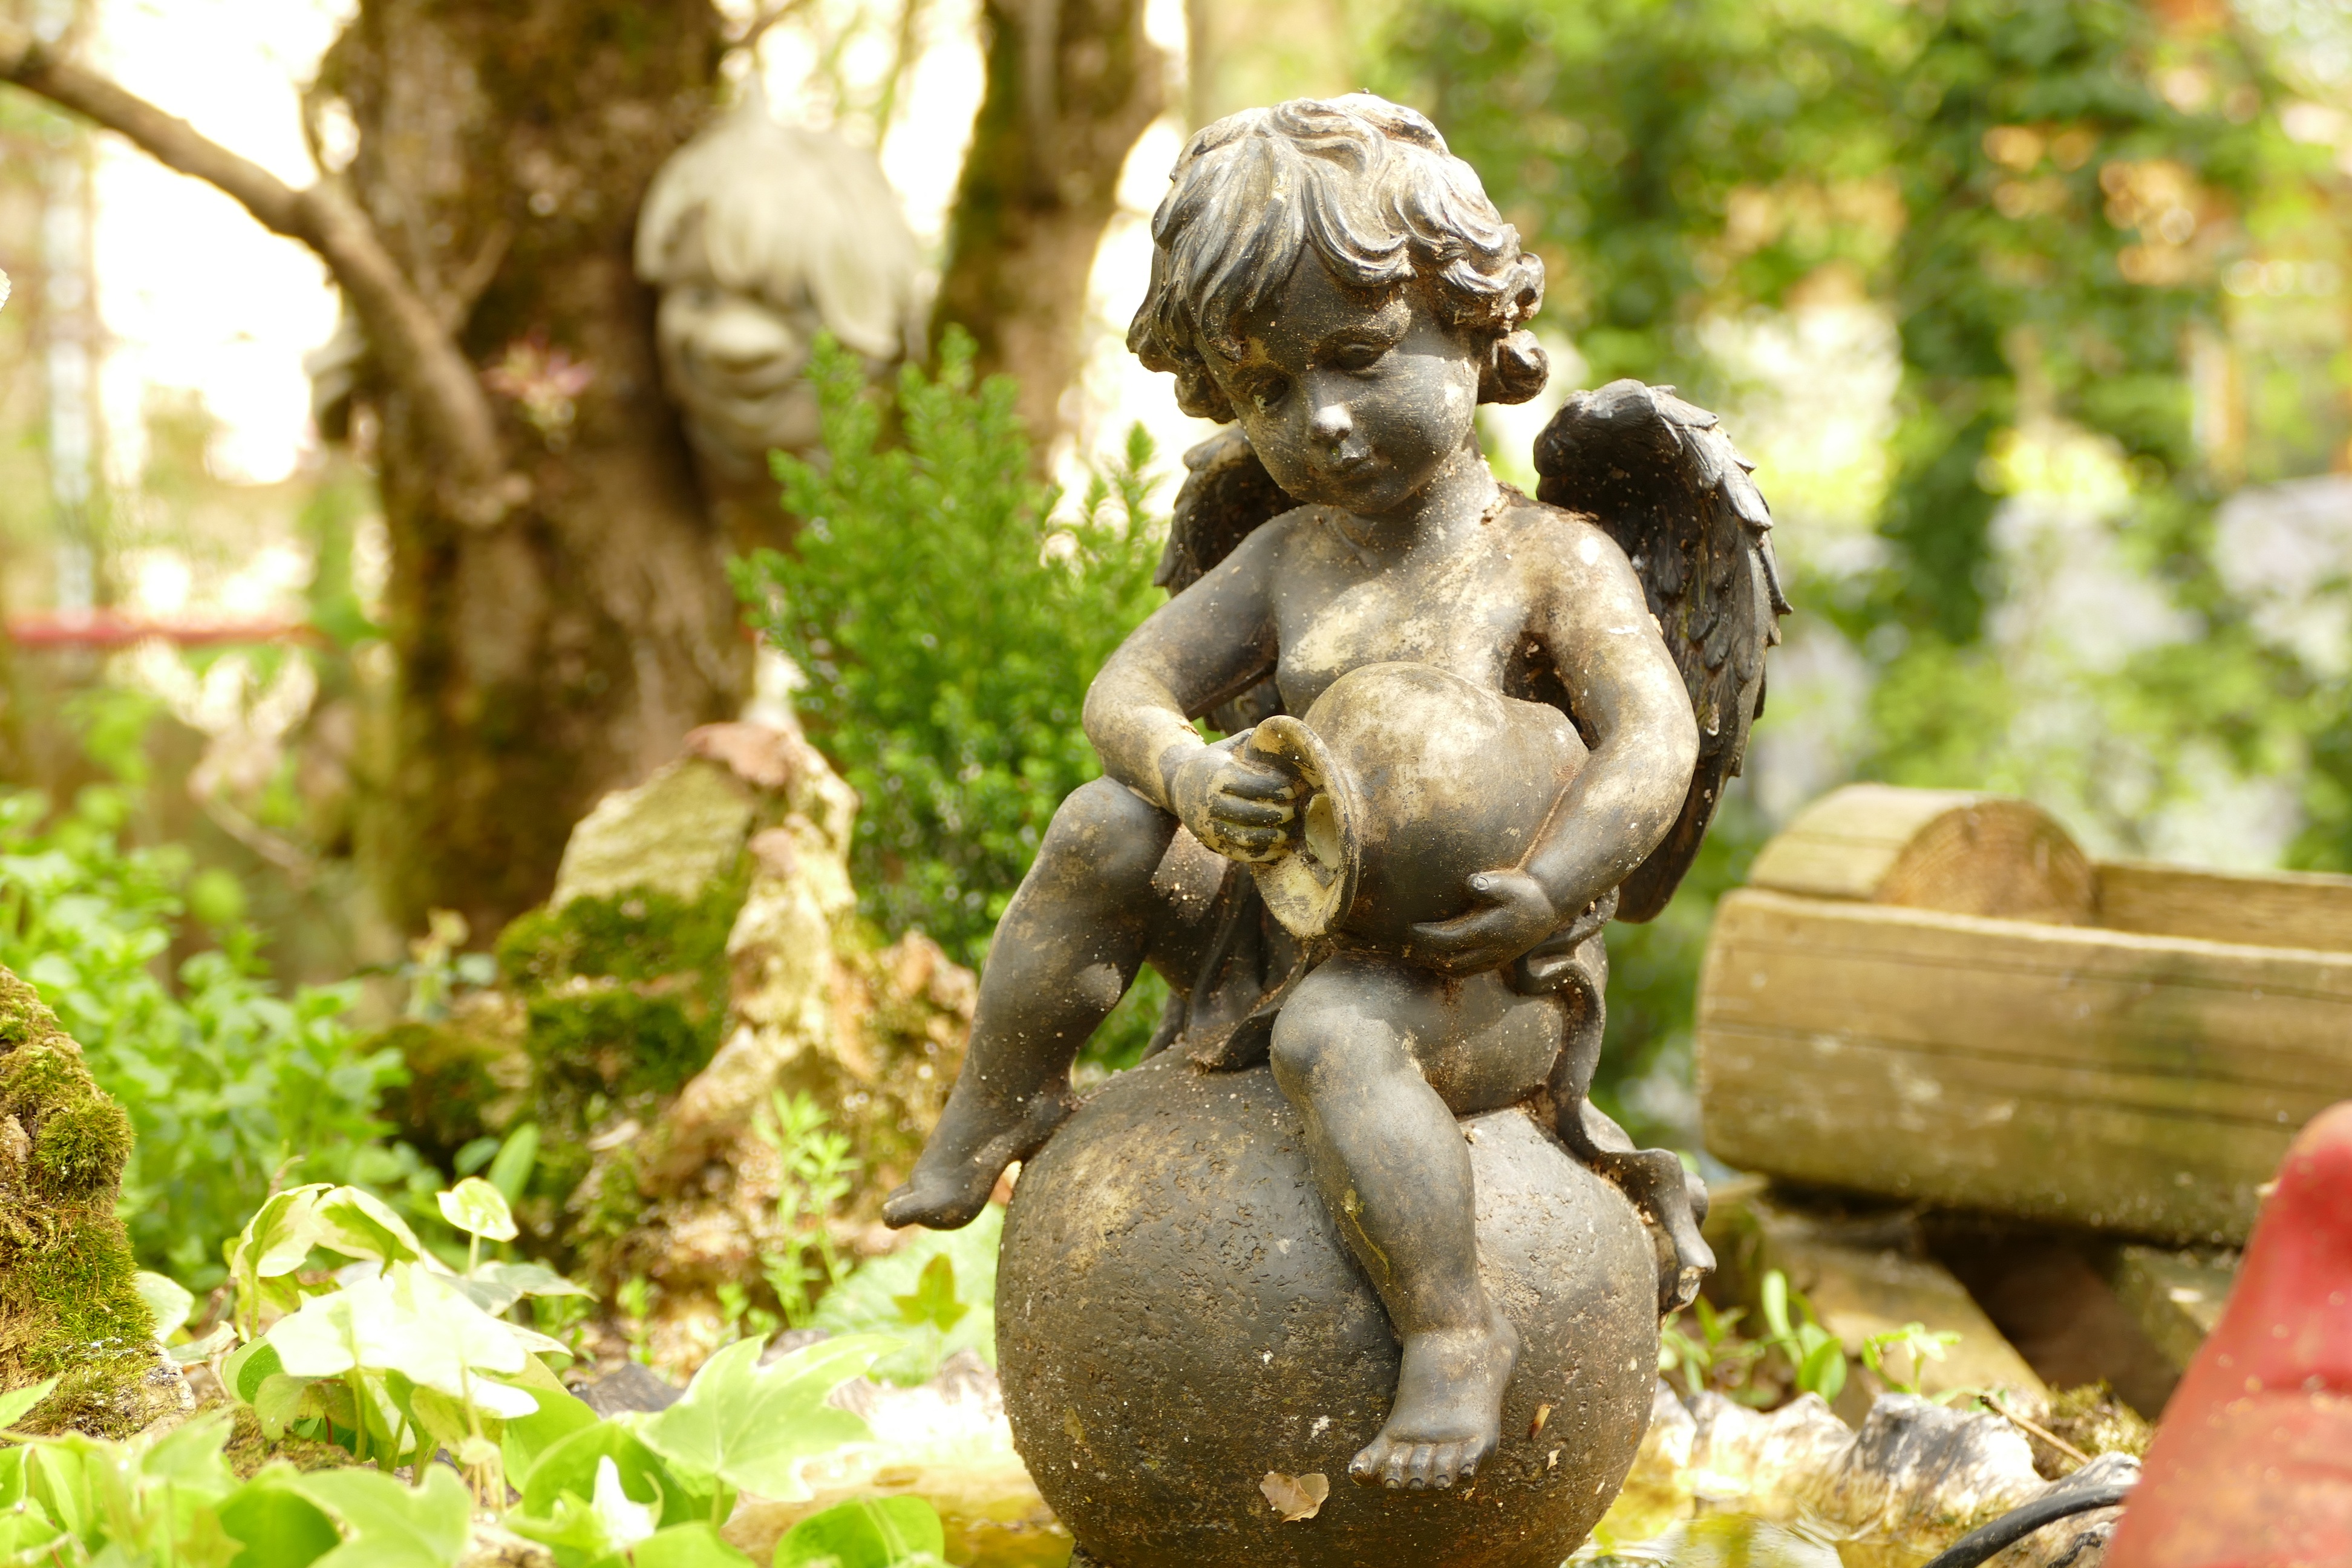 A cherub statue in a garden by jurasud